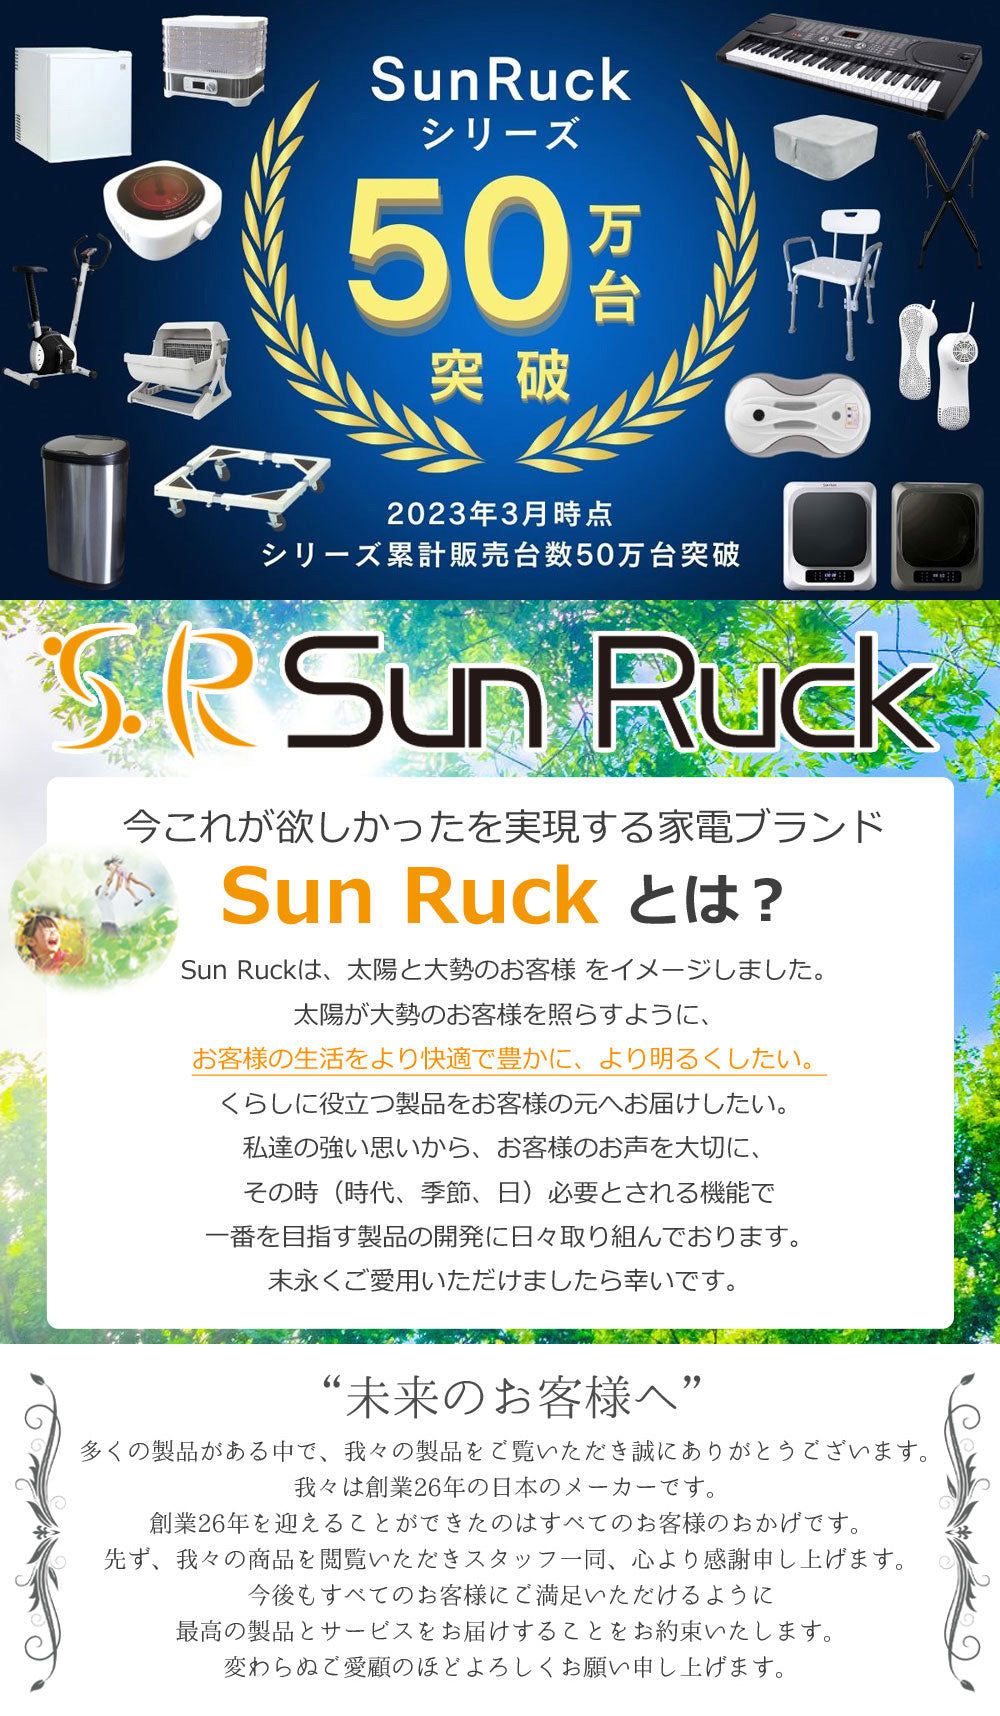 Sun Ruck 木目調 冷蔵庫 48L 冷庫さん ペルチェ方式 1ドア 右開き おしゃれ 一人暮らし 1ドア冷蔵庫 木目調冷蔵庫 小型冷蔵庫 セカンド冷蔵庫 ミニ冷蔵庫 コンパクト 静音 新生活 ひとり暮らし SR-R4803